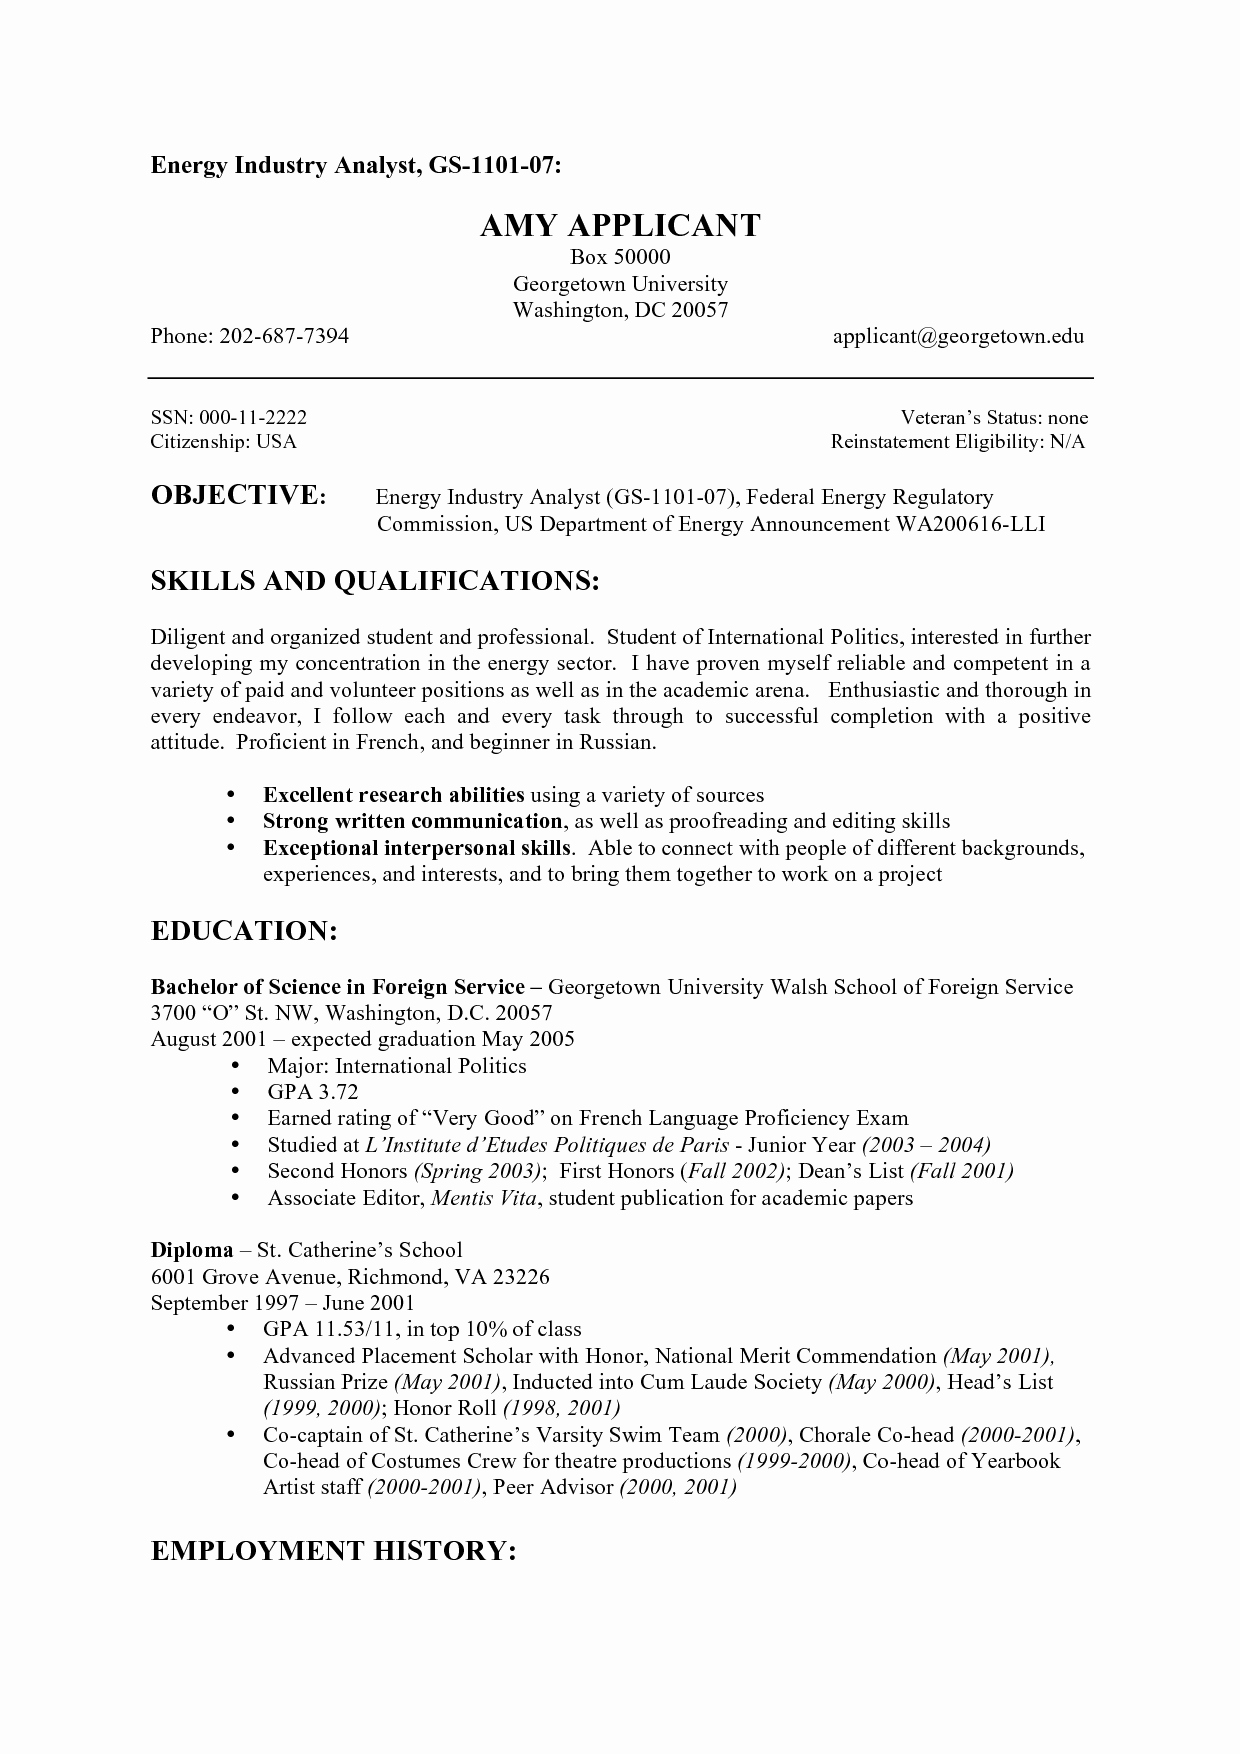 Sample Resume for Federal Job Inspirational Federal Resume Cover Letter Sample Resume